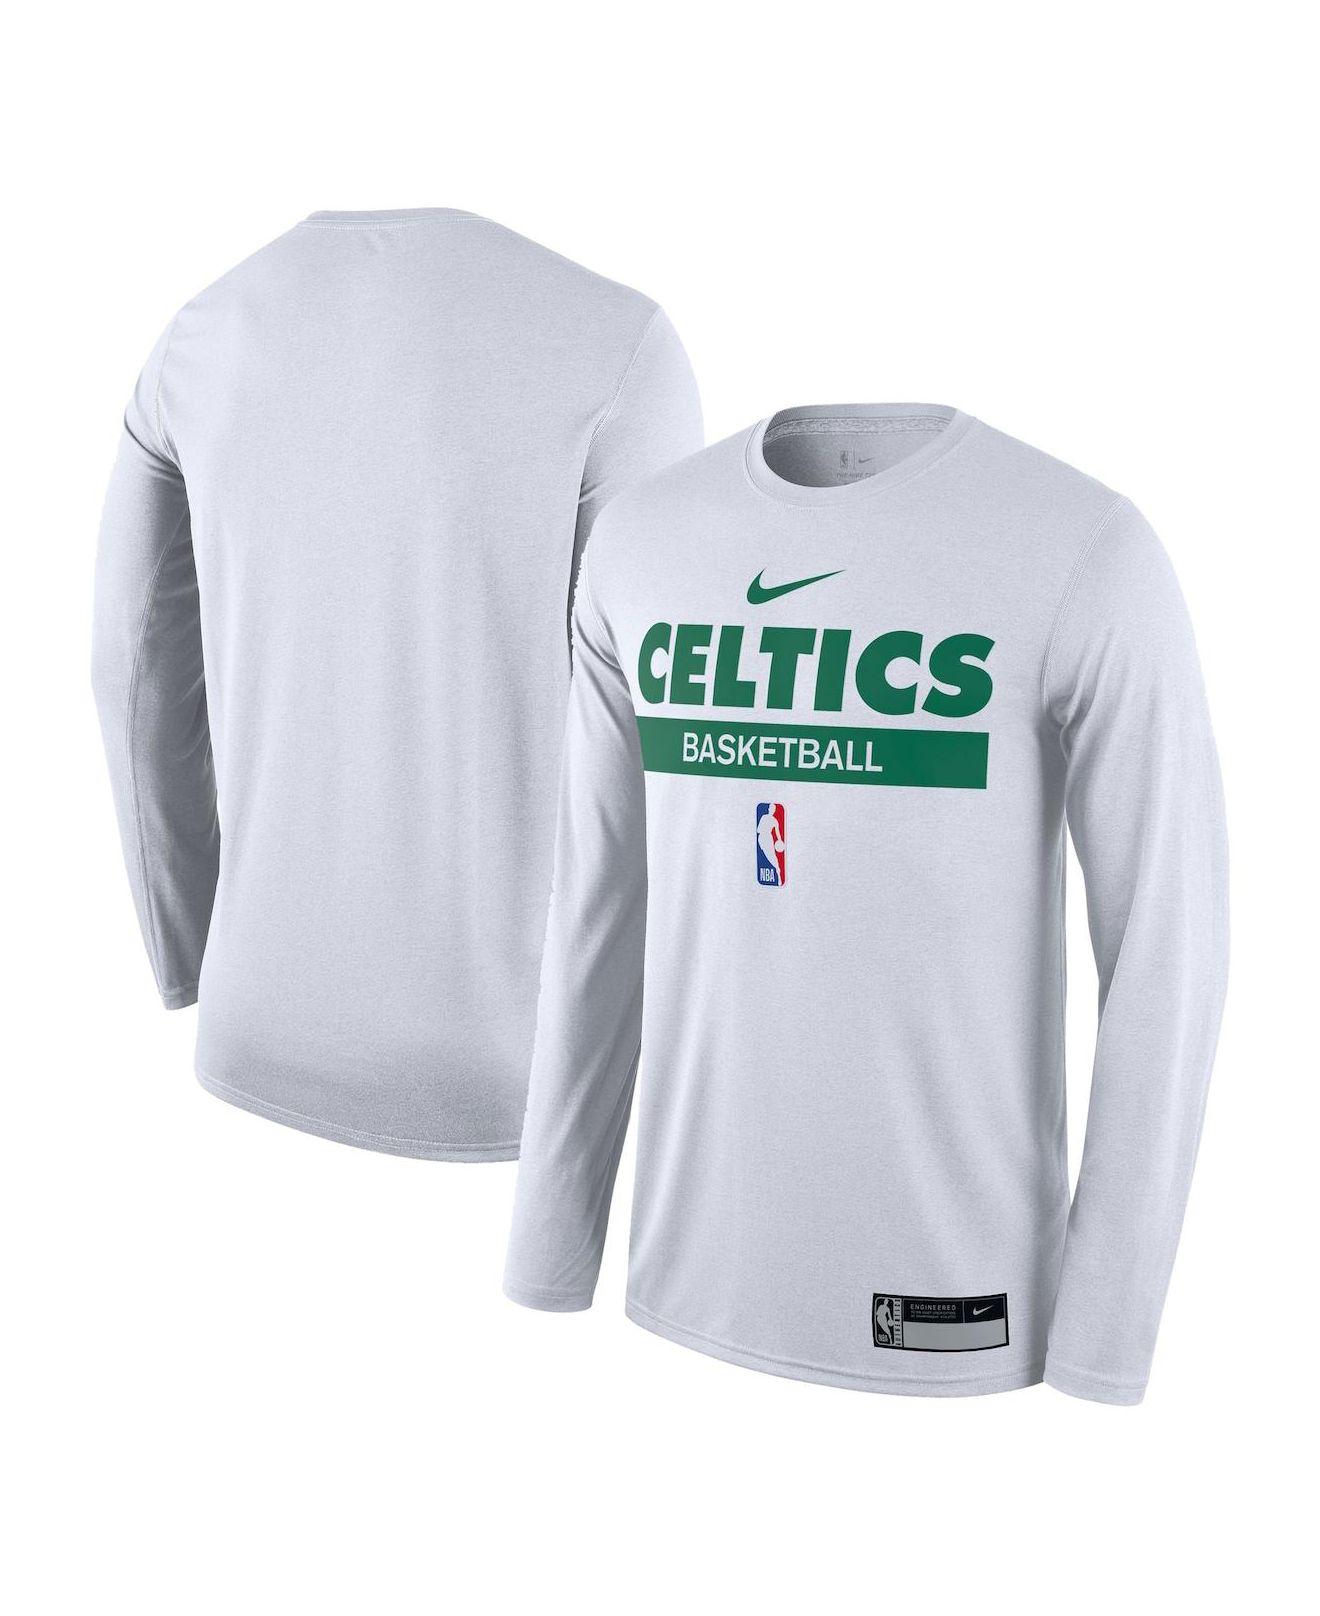 celtics basketball nike shirt